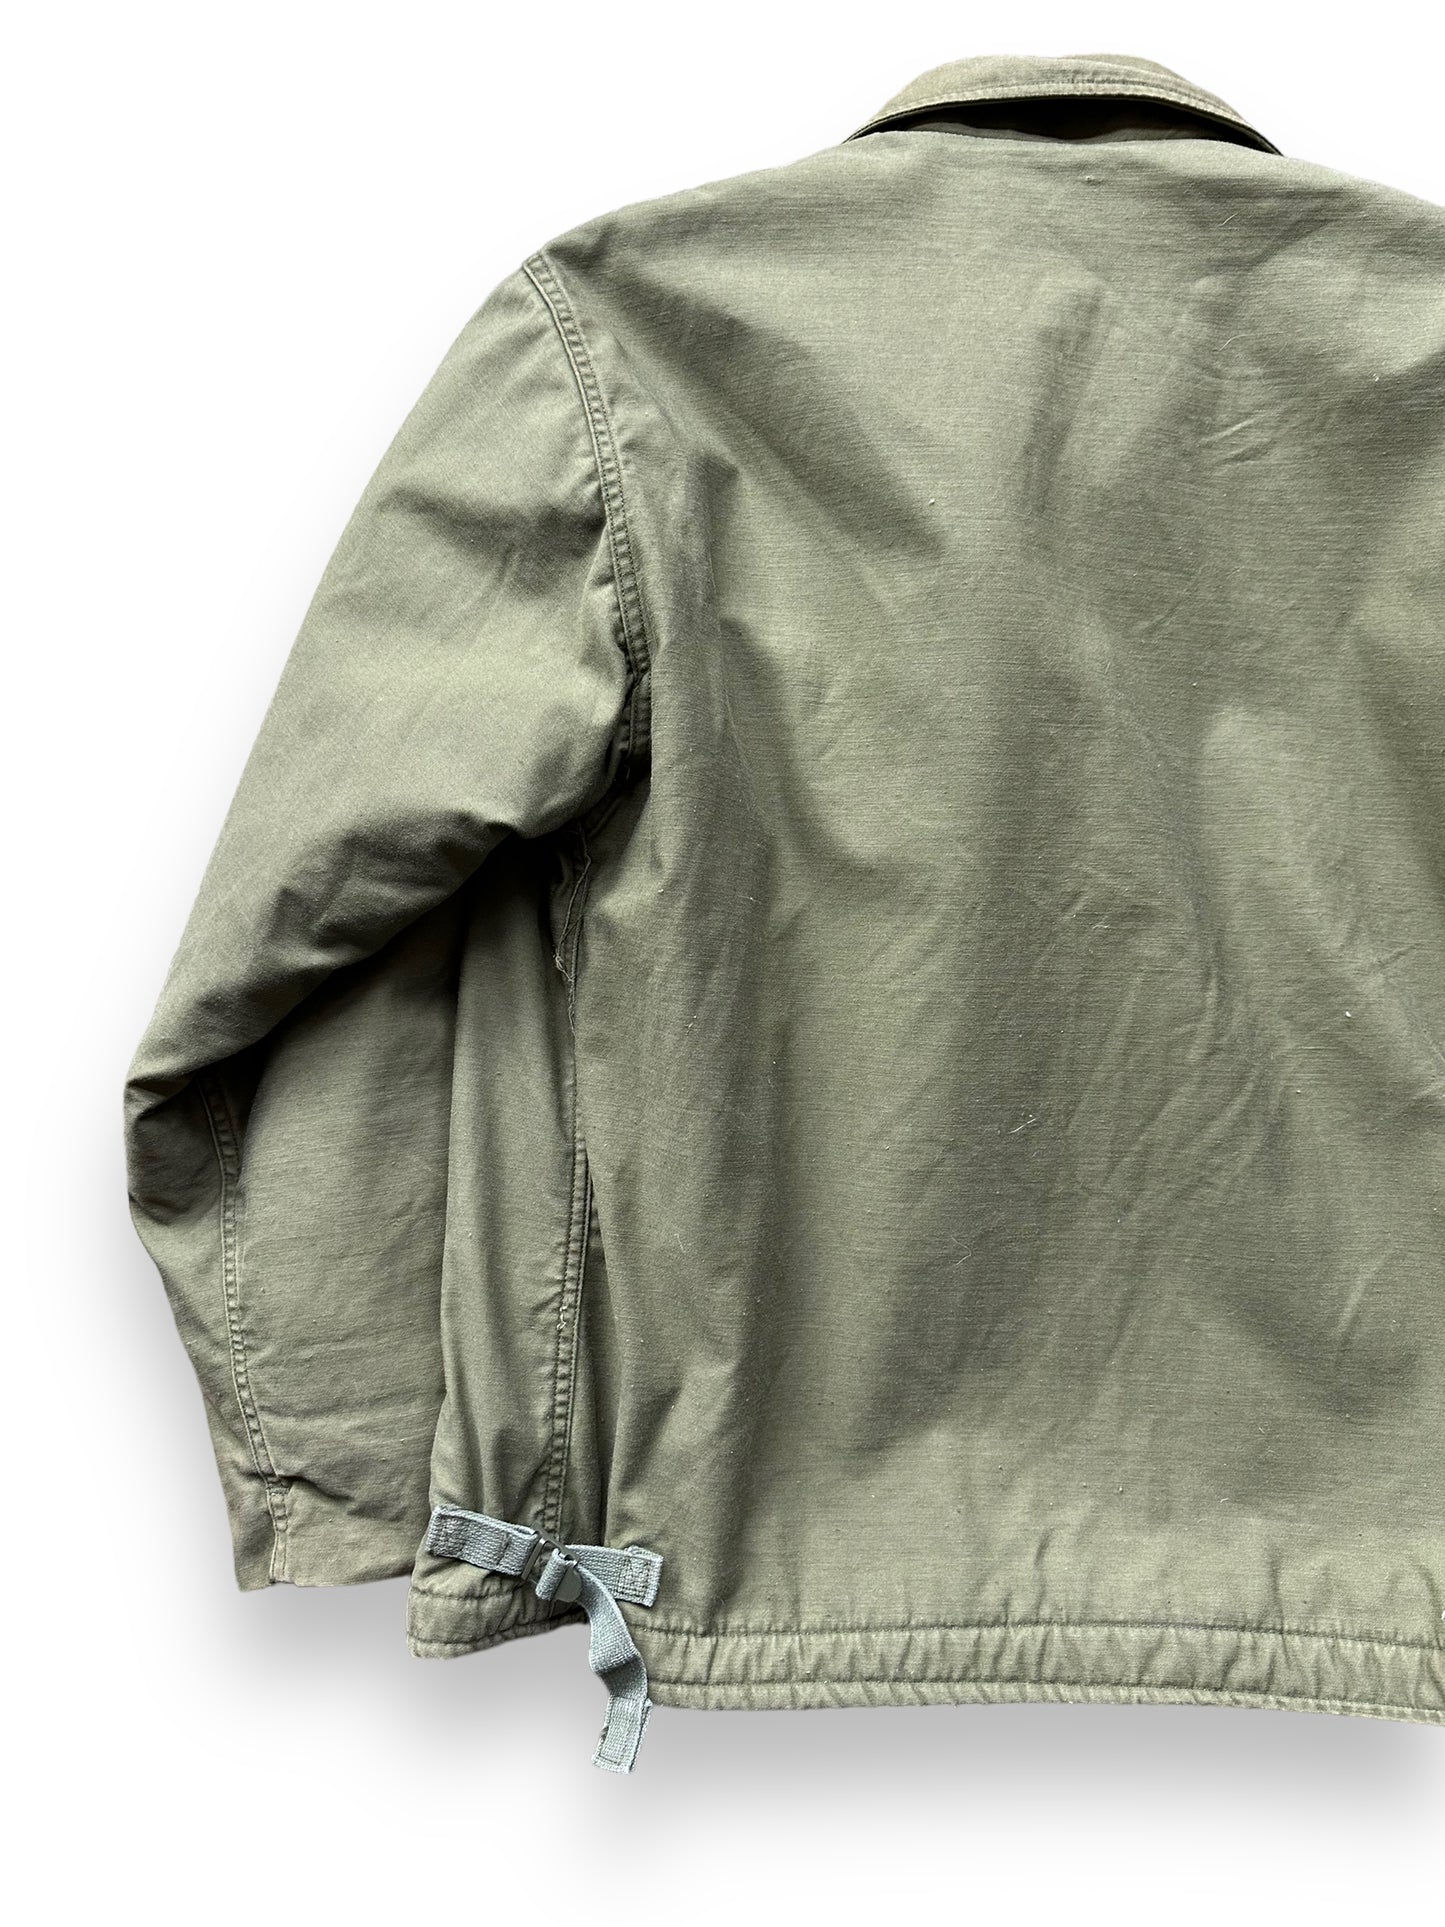 Left Rear View of Vintage Viet Nam Era Cold Weather A-2 Jacket SZ XL | Vintage Military Jackets Seattle | Barn Owl Vintage Clothing Seattle